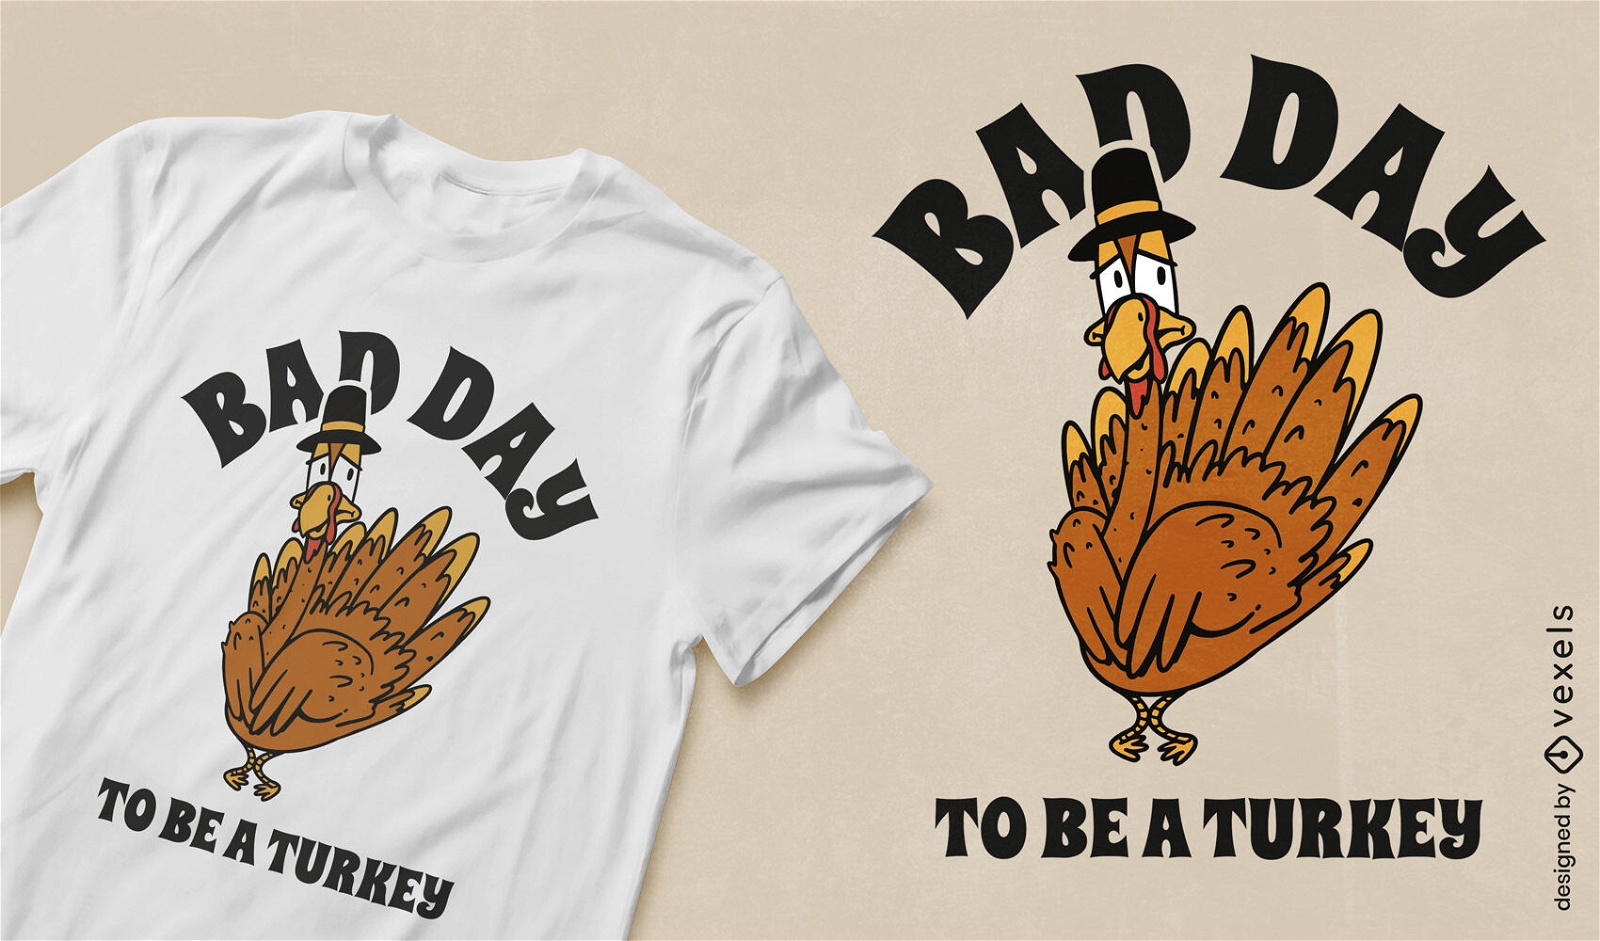 Scared turkey animal t-shirt design